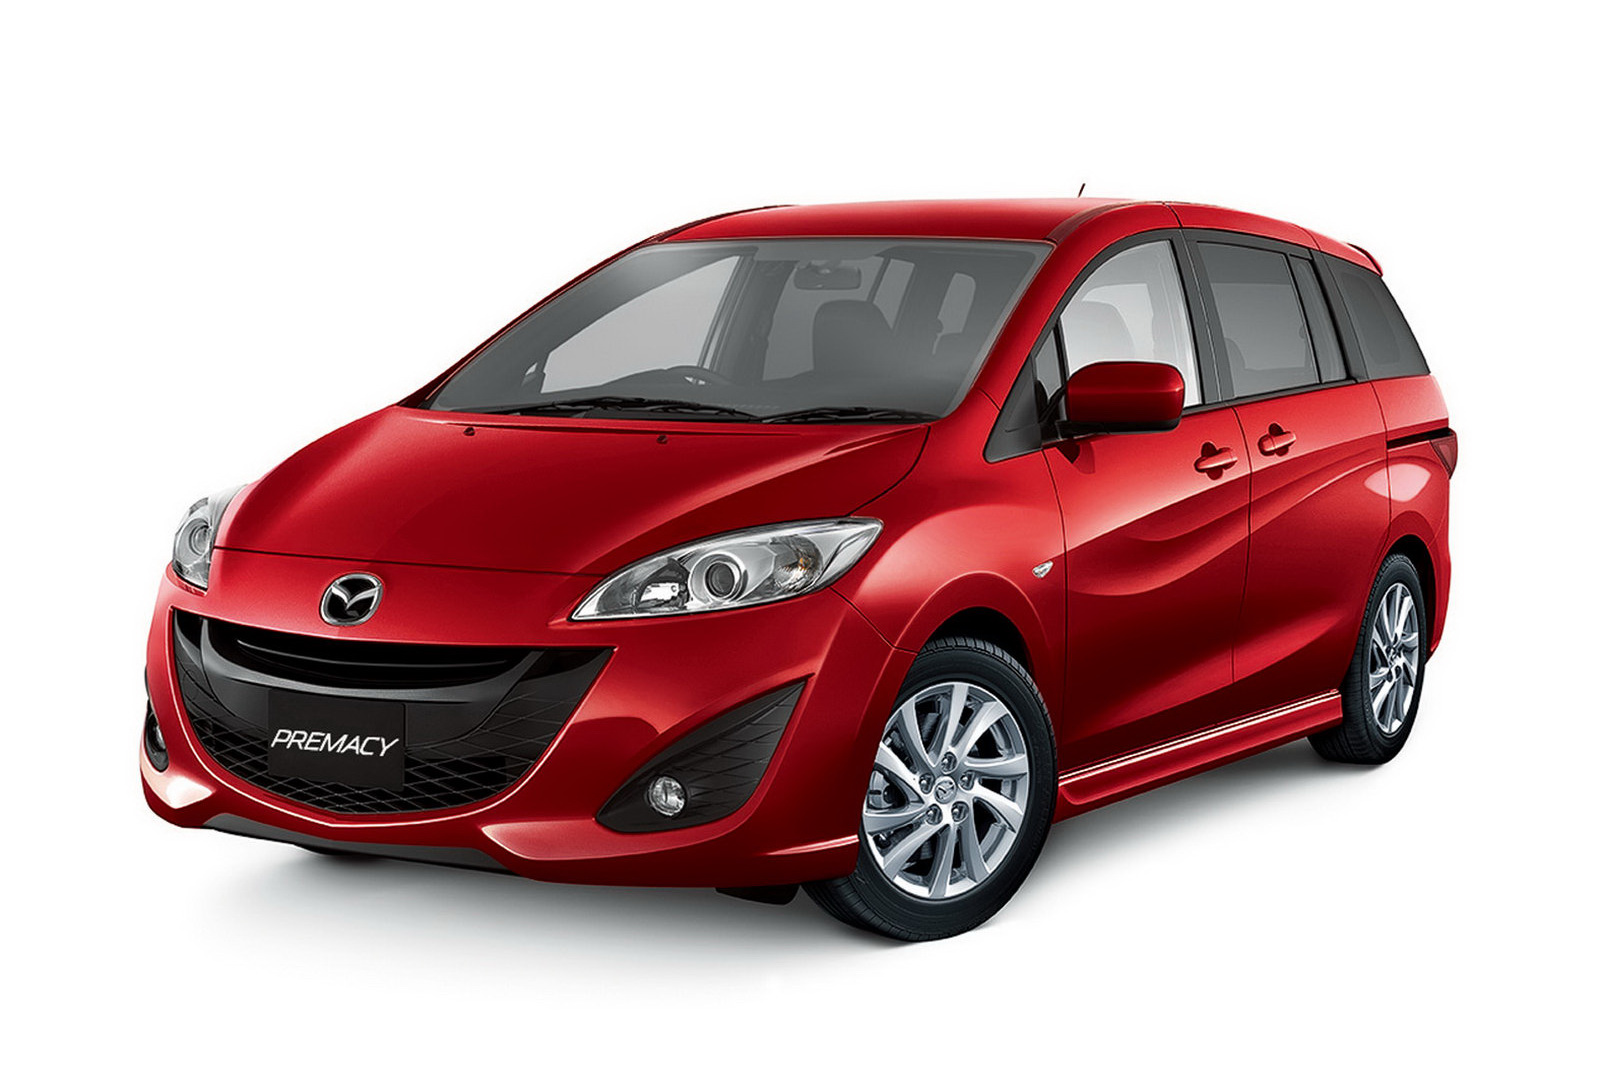 JDM Mazda Premacy / Mazda5 Minivan gets AWD Option